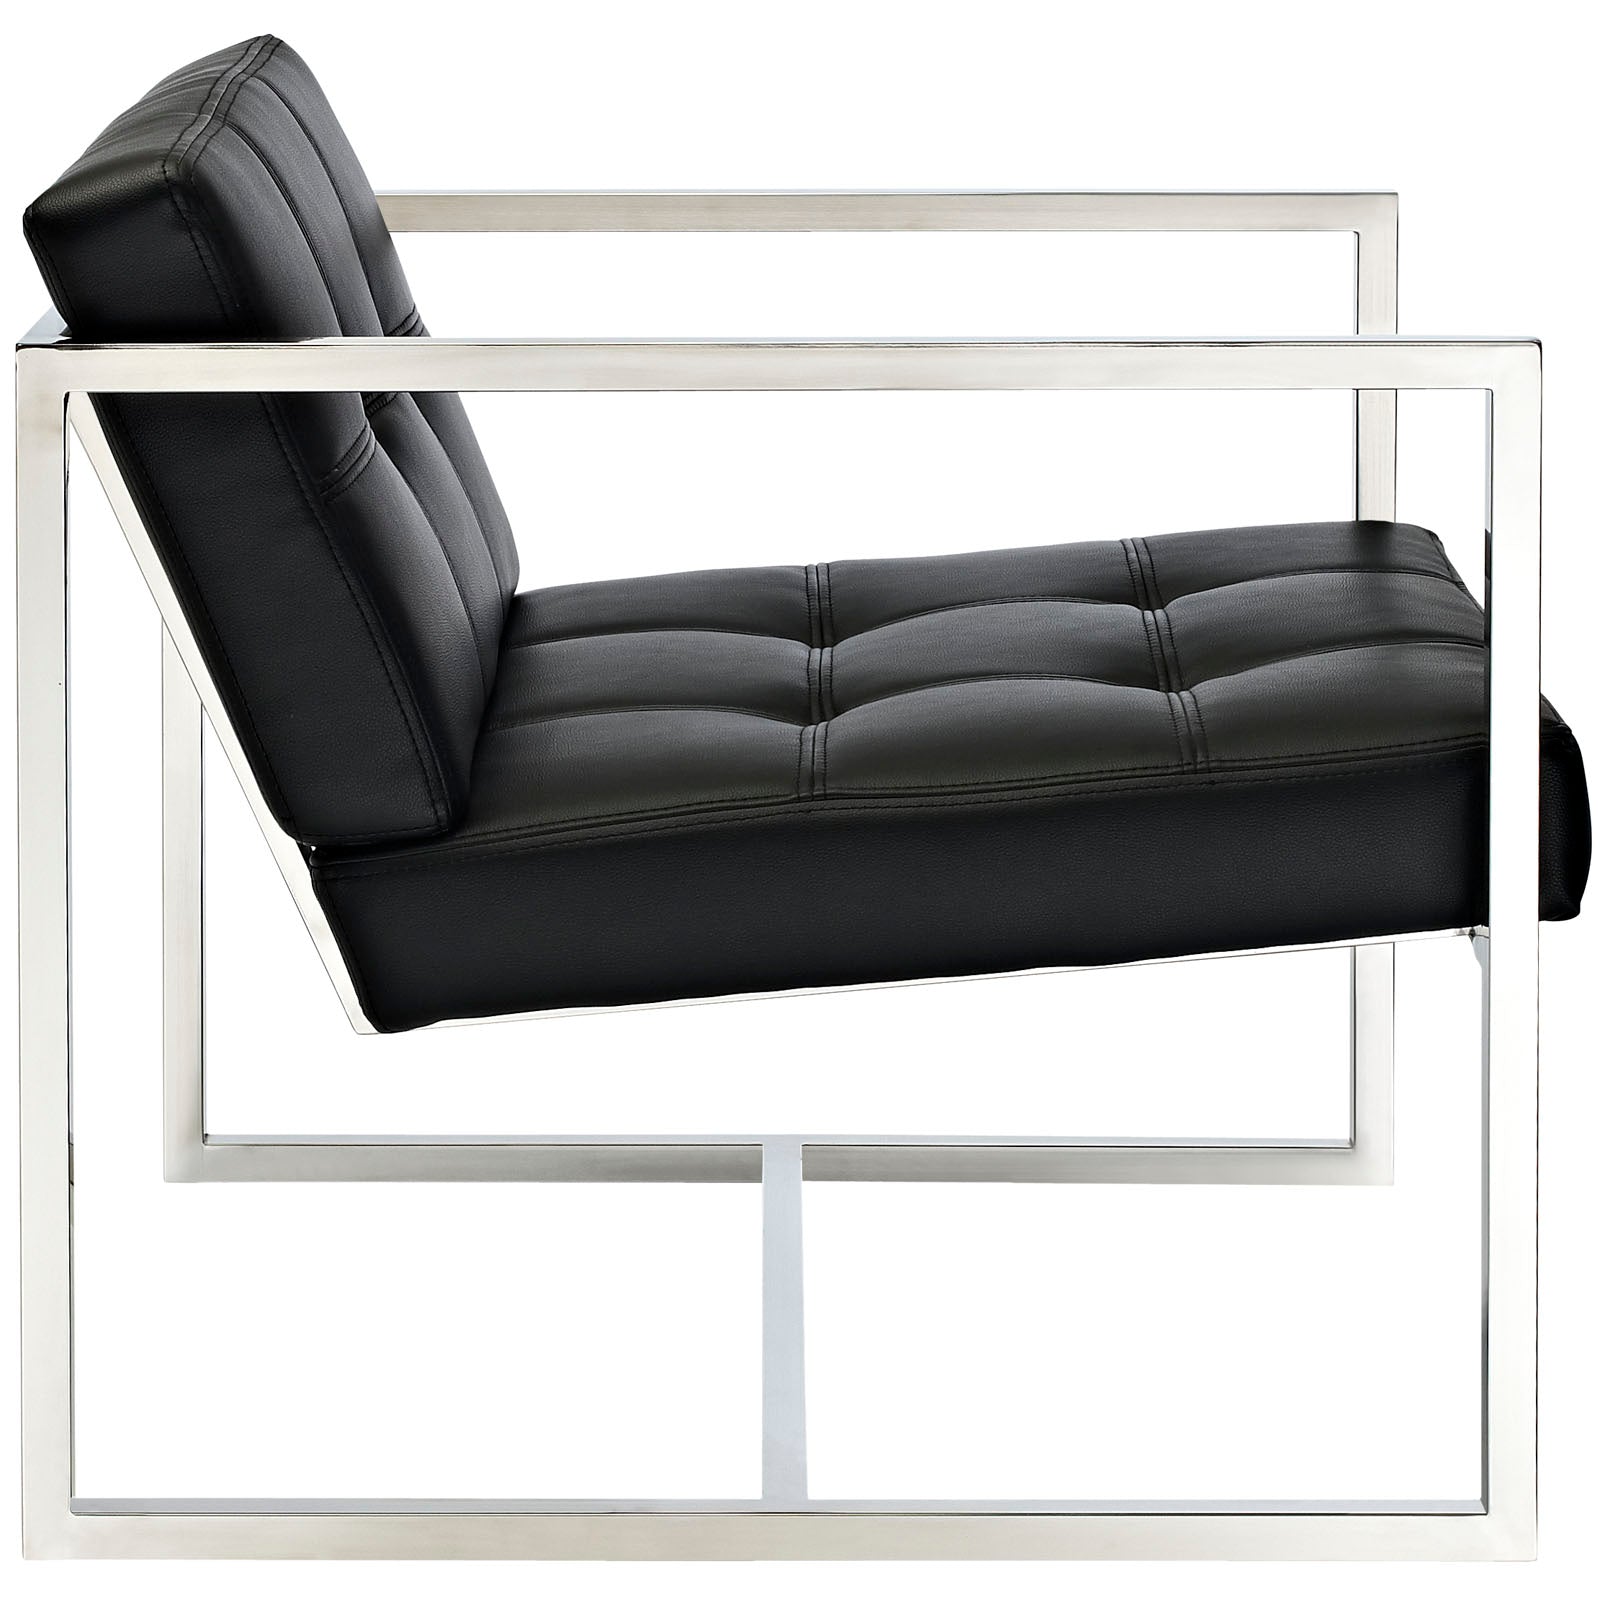 Hover Upholstered Vinyl Lounge Chair